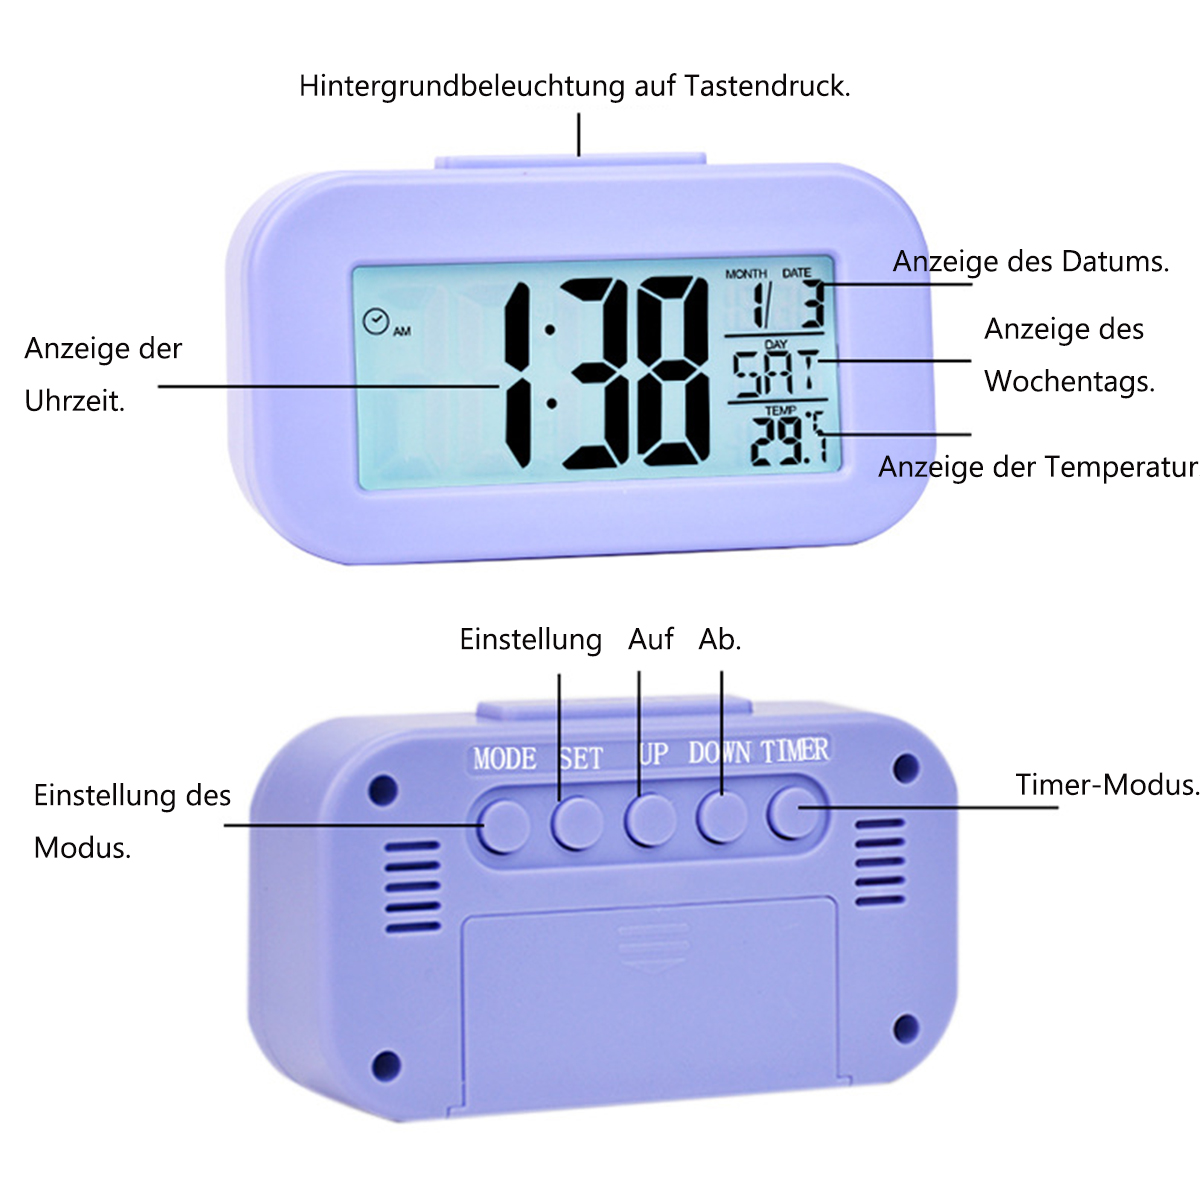 Alarm Elektronische Uhr Alarm BRIGHTAKE LED-Display Snooze-Funktion Wecker